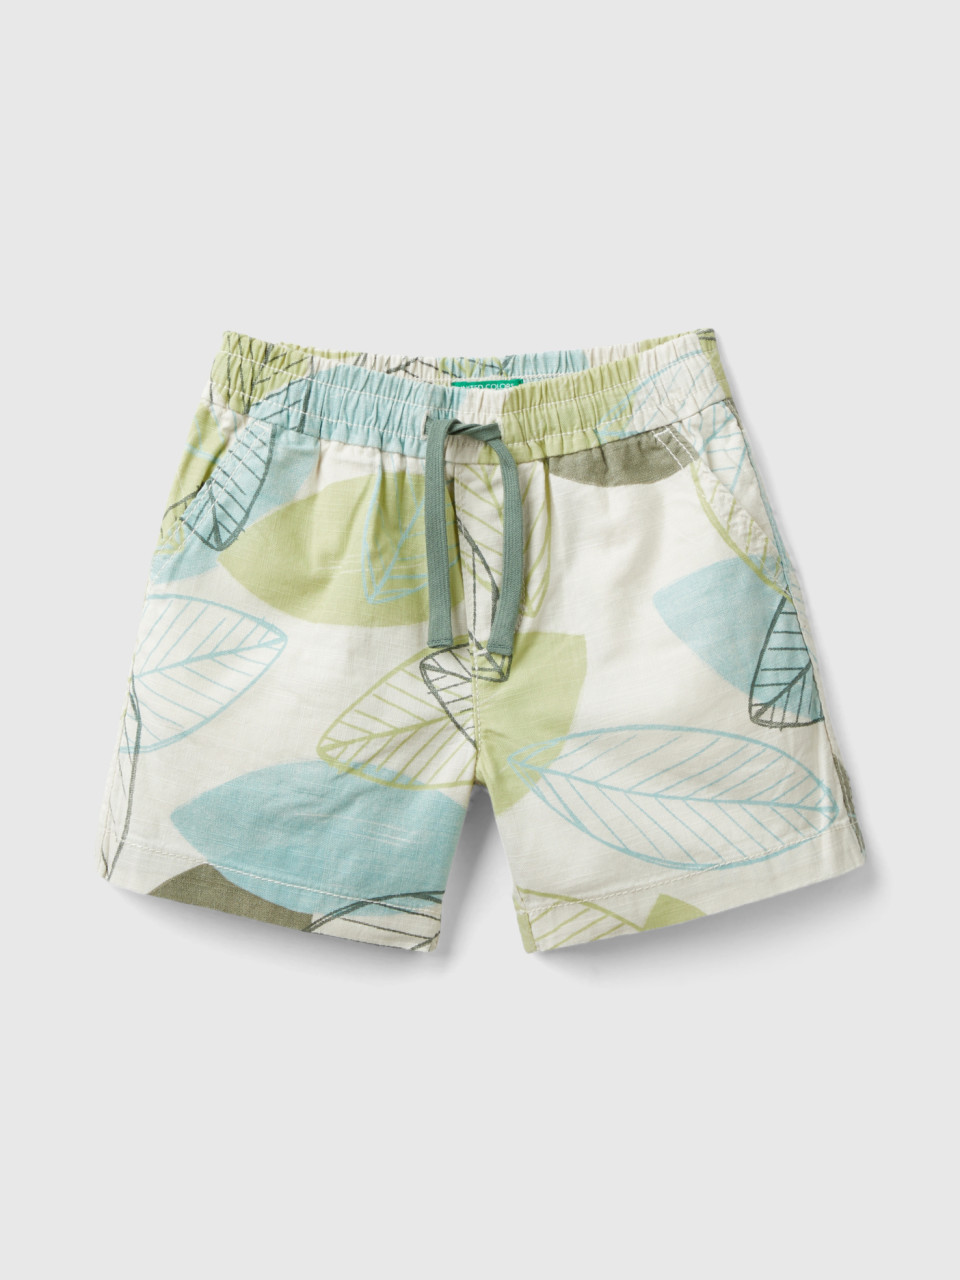 Benetton, Shorts With Leaf Print, Creamy White, Kids